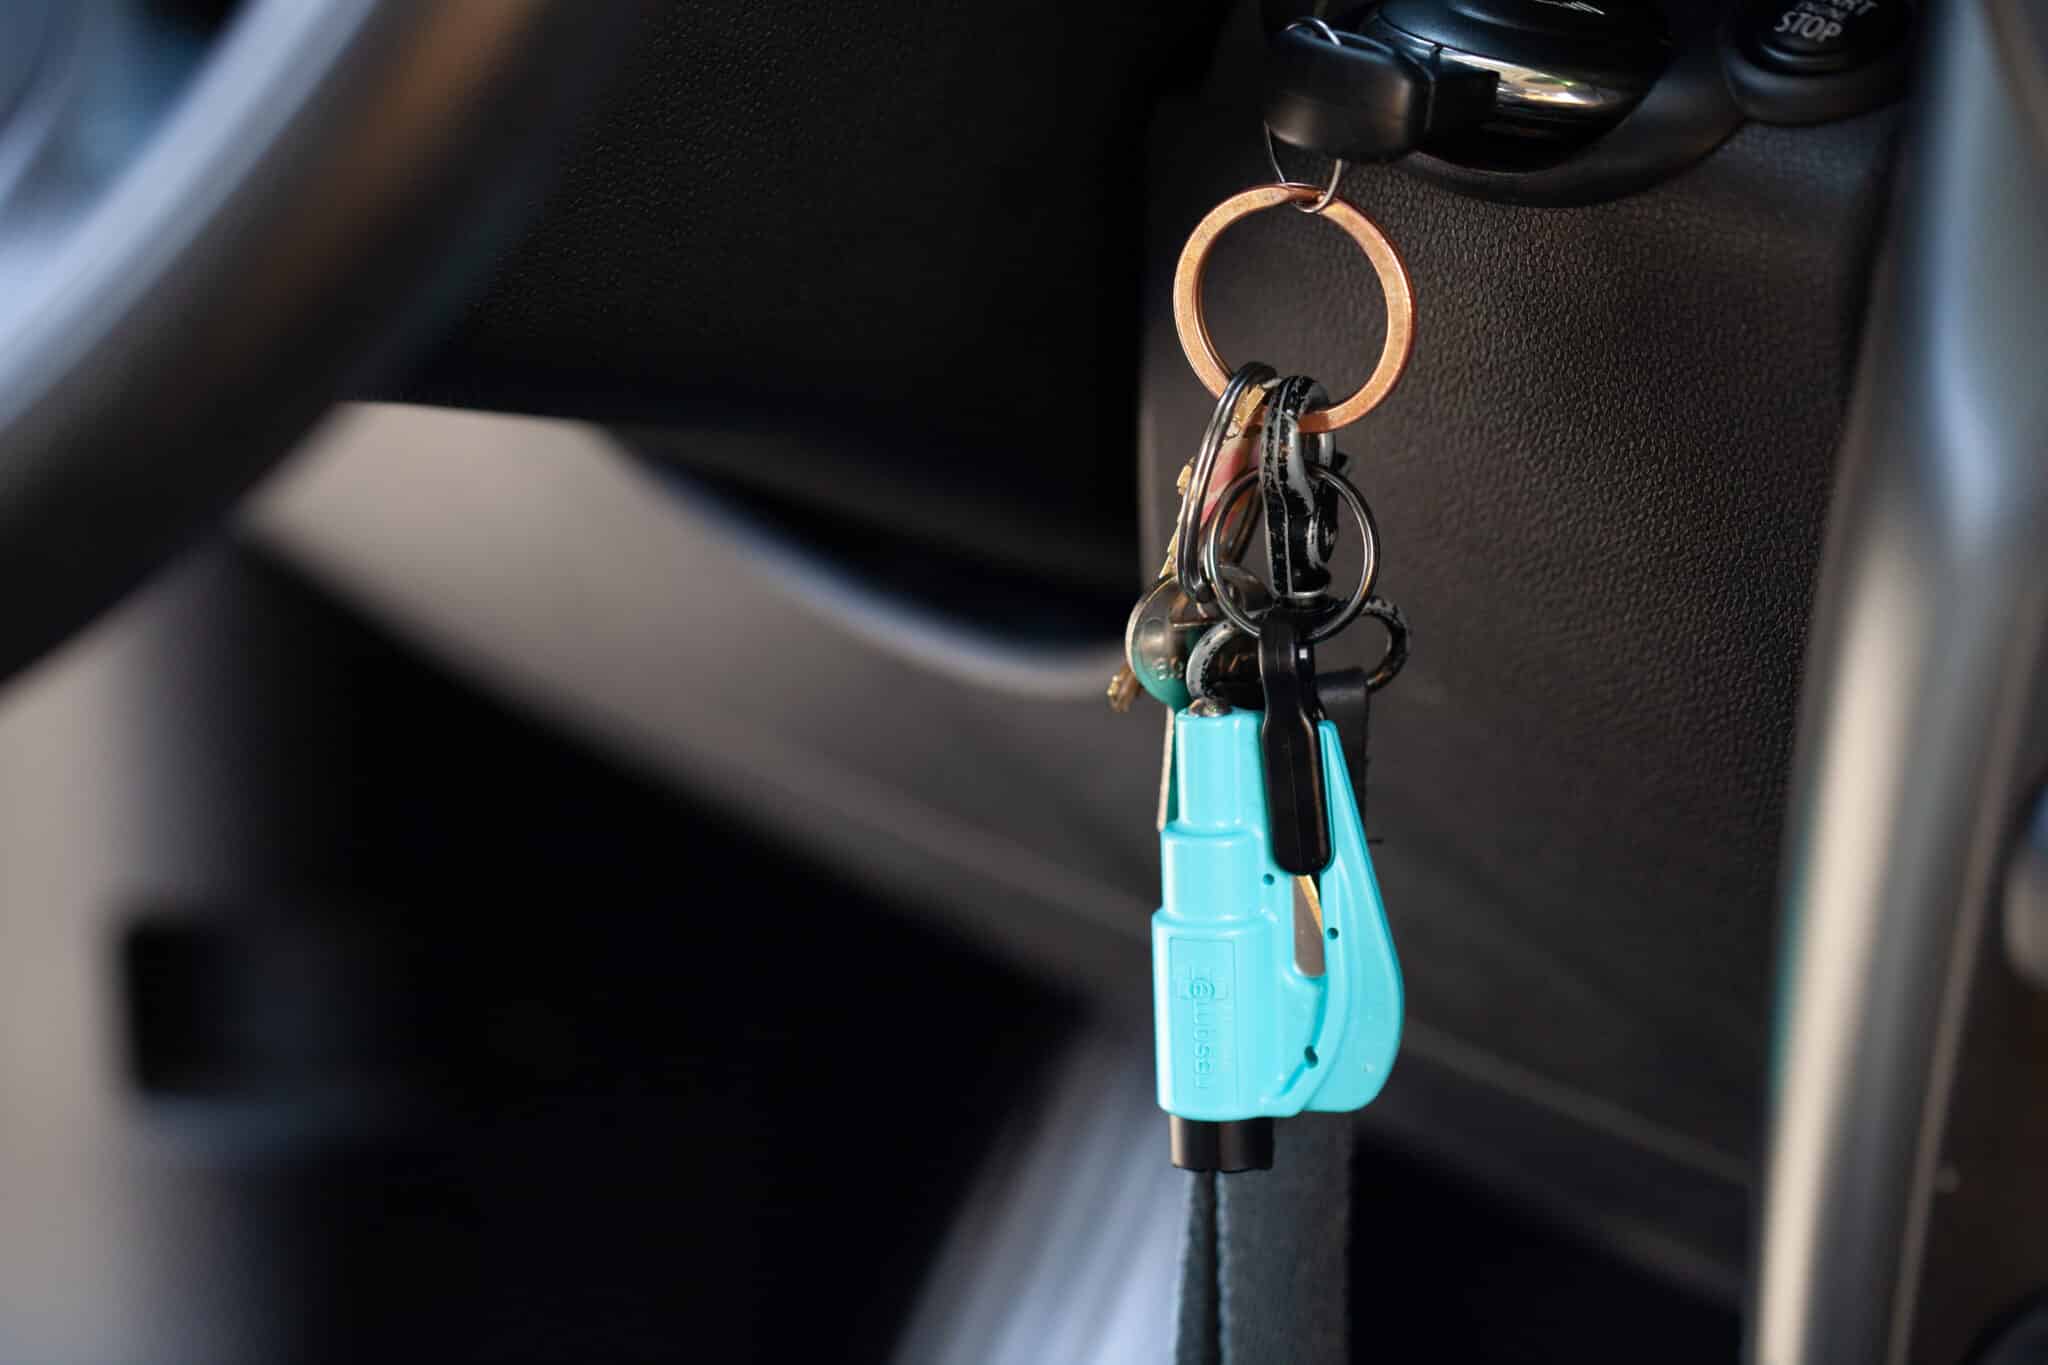 resqme® Car Escape Tool, Seatbelt Cutter / Window Breaker – Pack of 3  Black, Blue & Safety Yellow - resqme, Inc.